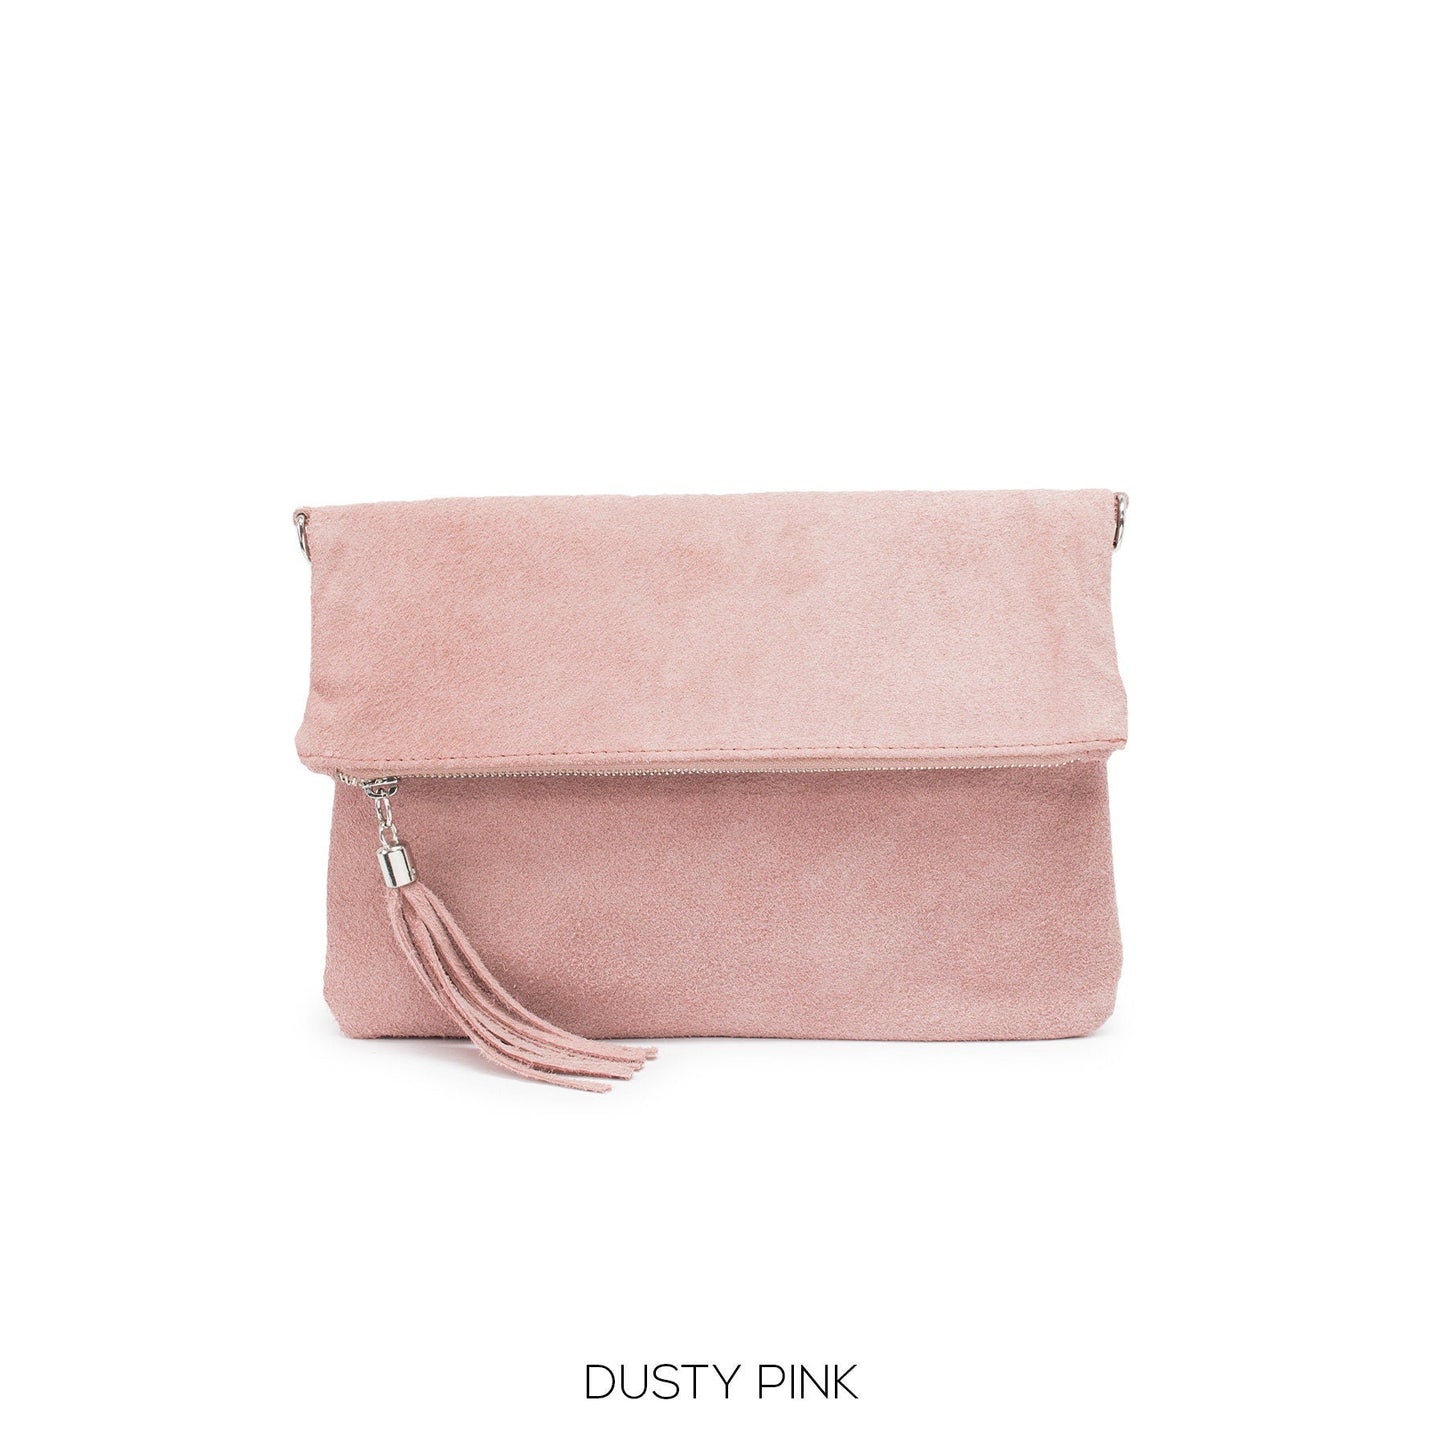 Dusty Pink Suede Clutch Bag